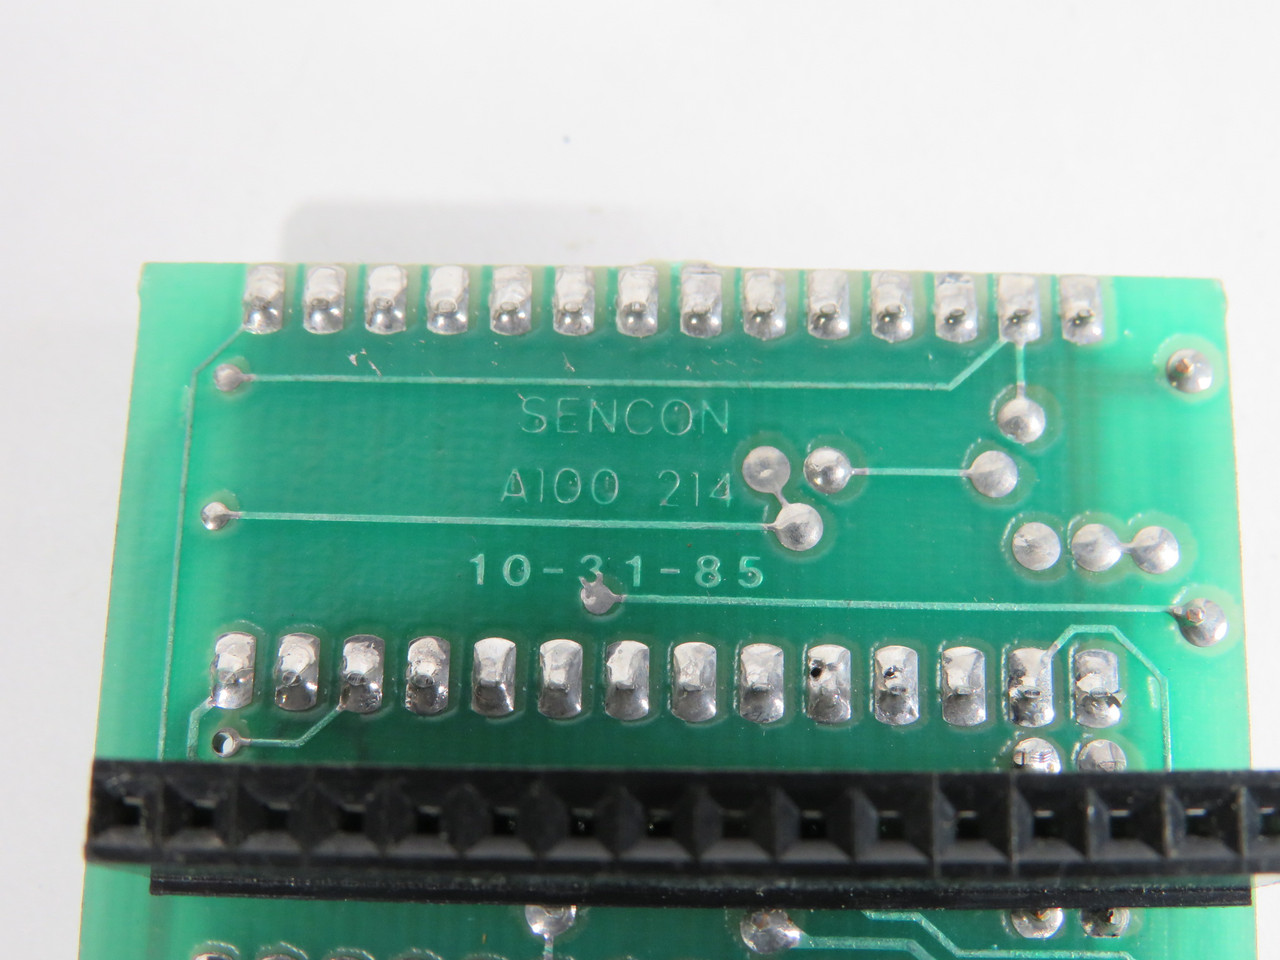 Sencon A100-214 Printed Circuit Board 89-05261 USED